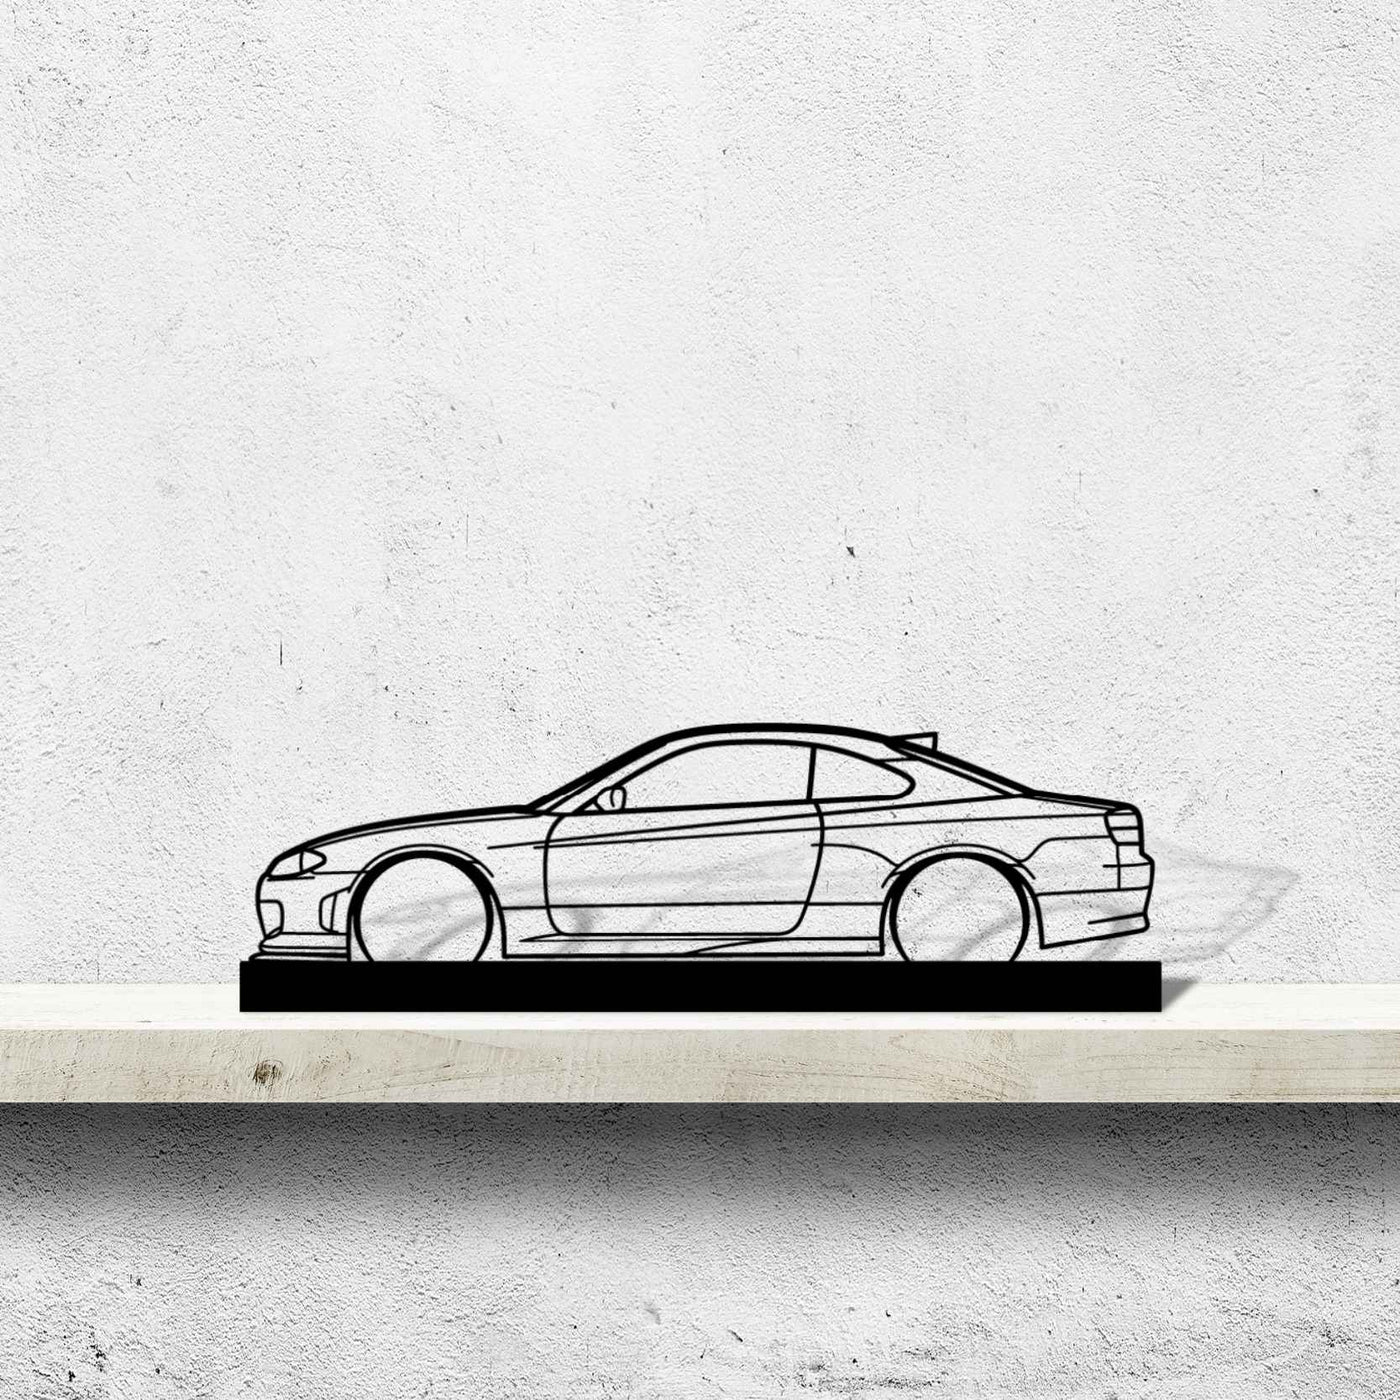 S15 Silvia 2000 Silhouette Metal Art Stand